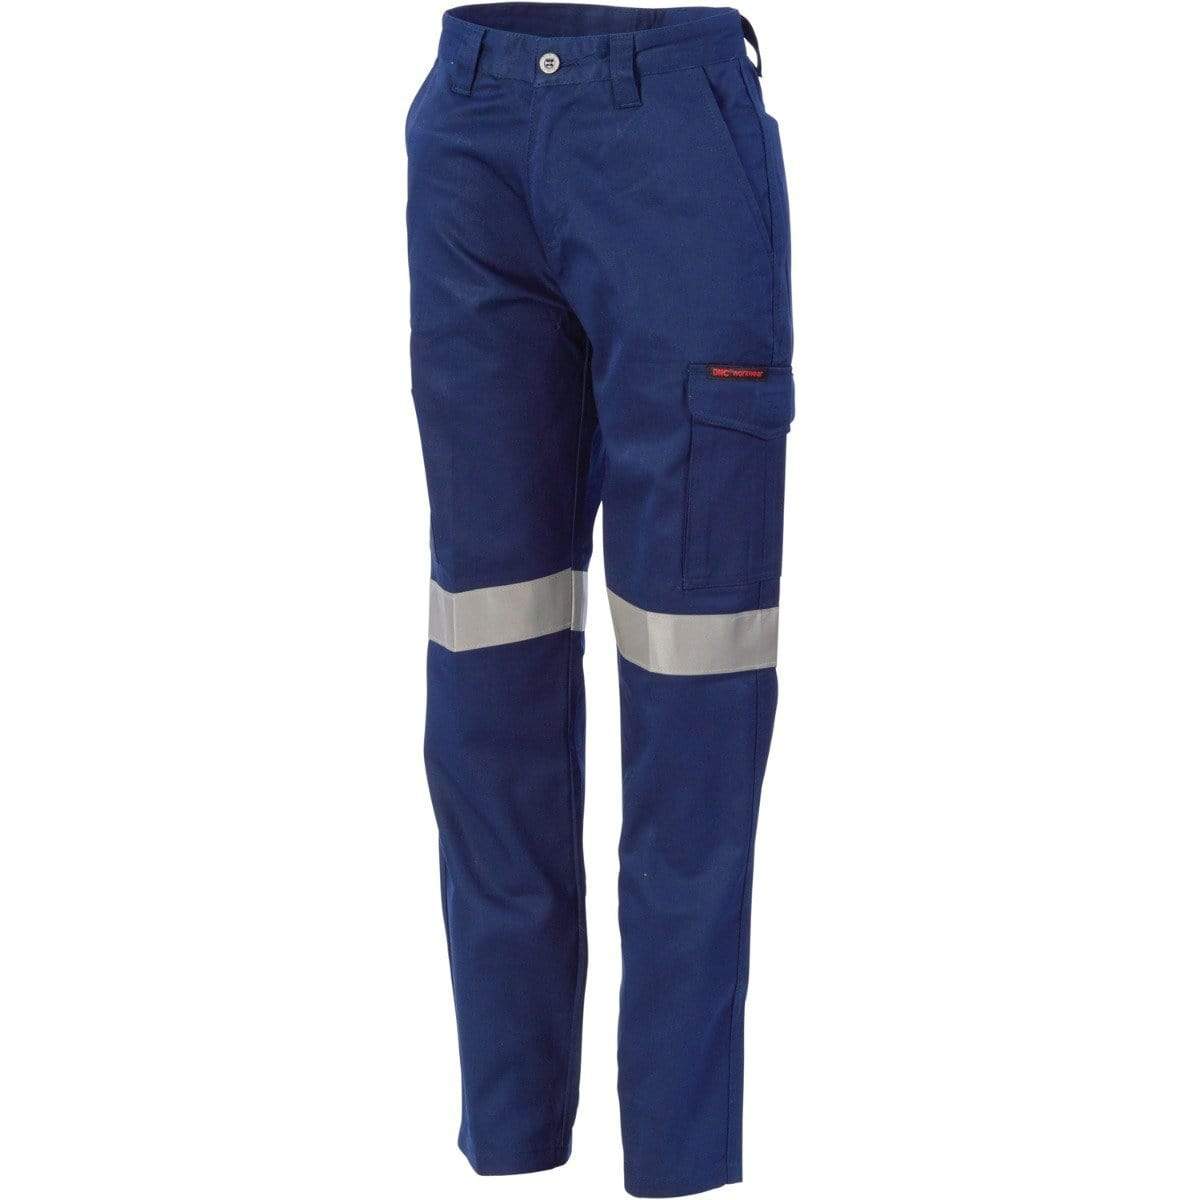 Dnc Workwear Ladies Digga Cool -breeze Cargo Taped Pants - 3357 Work Wear DNC Workwear Navy 8 